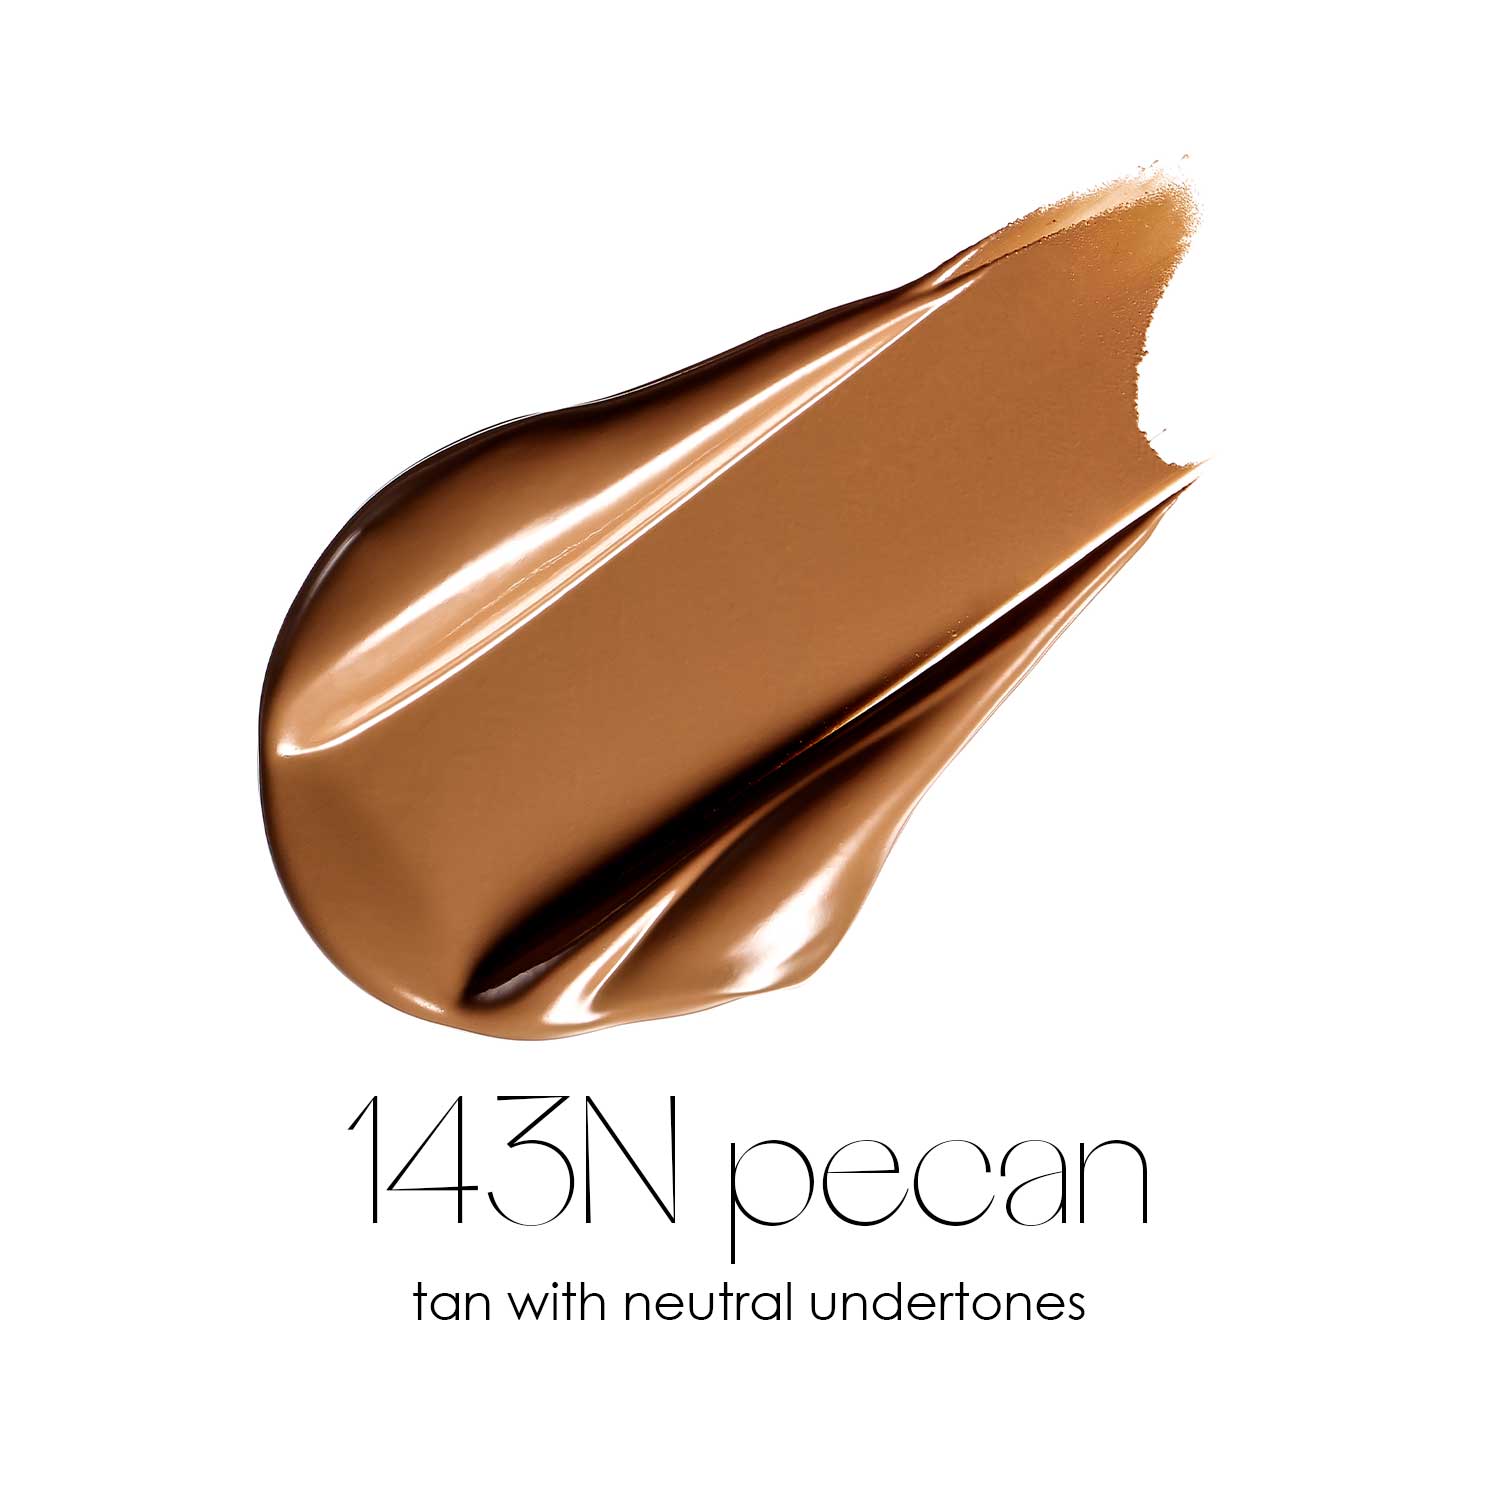 143N Pecan - Tan with neutral undertones